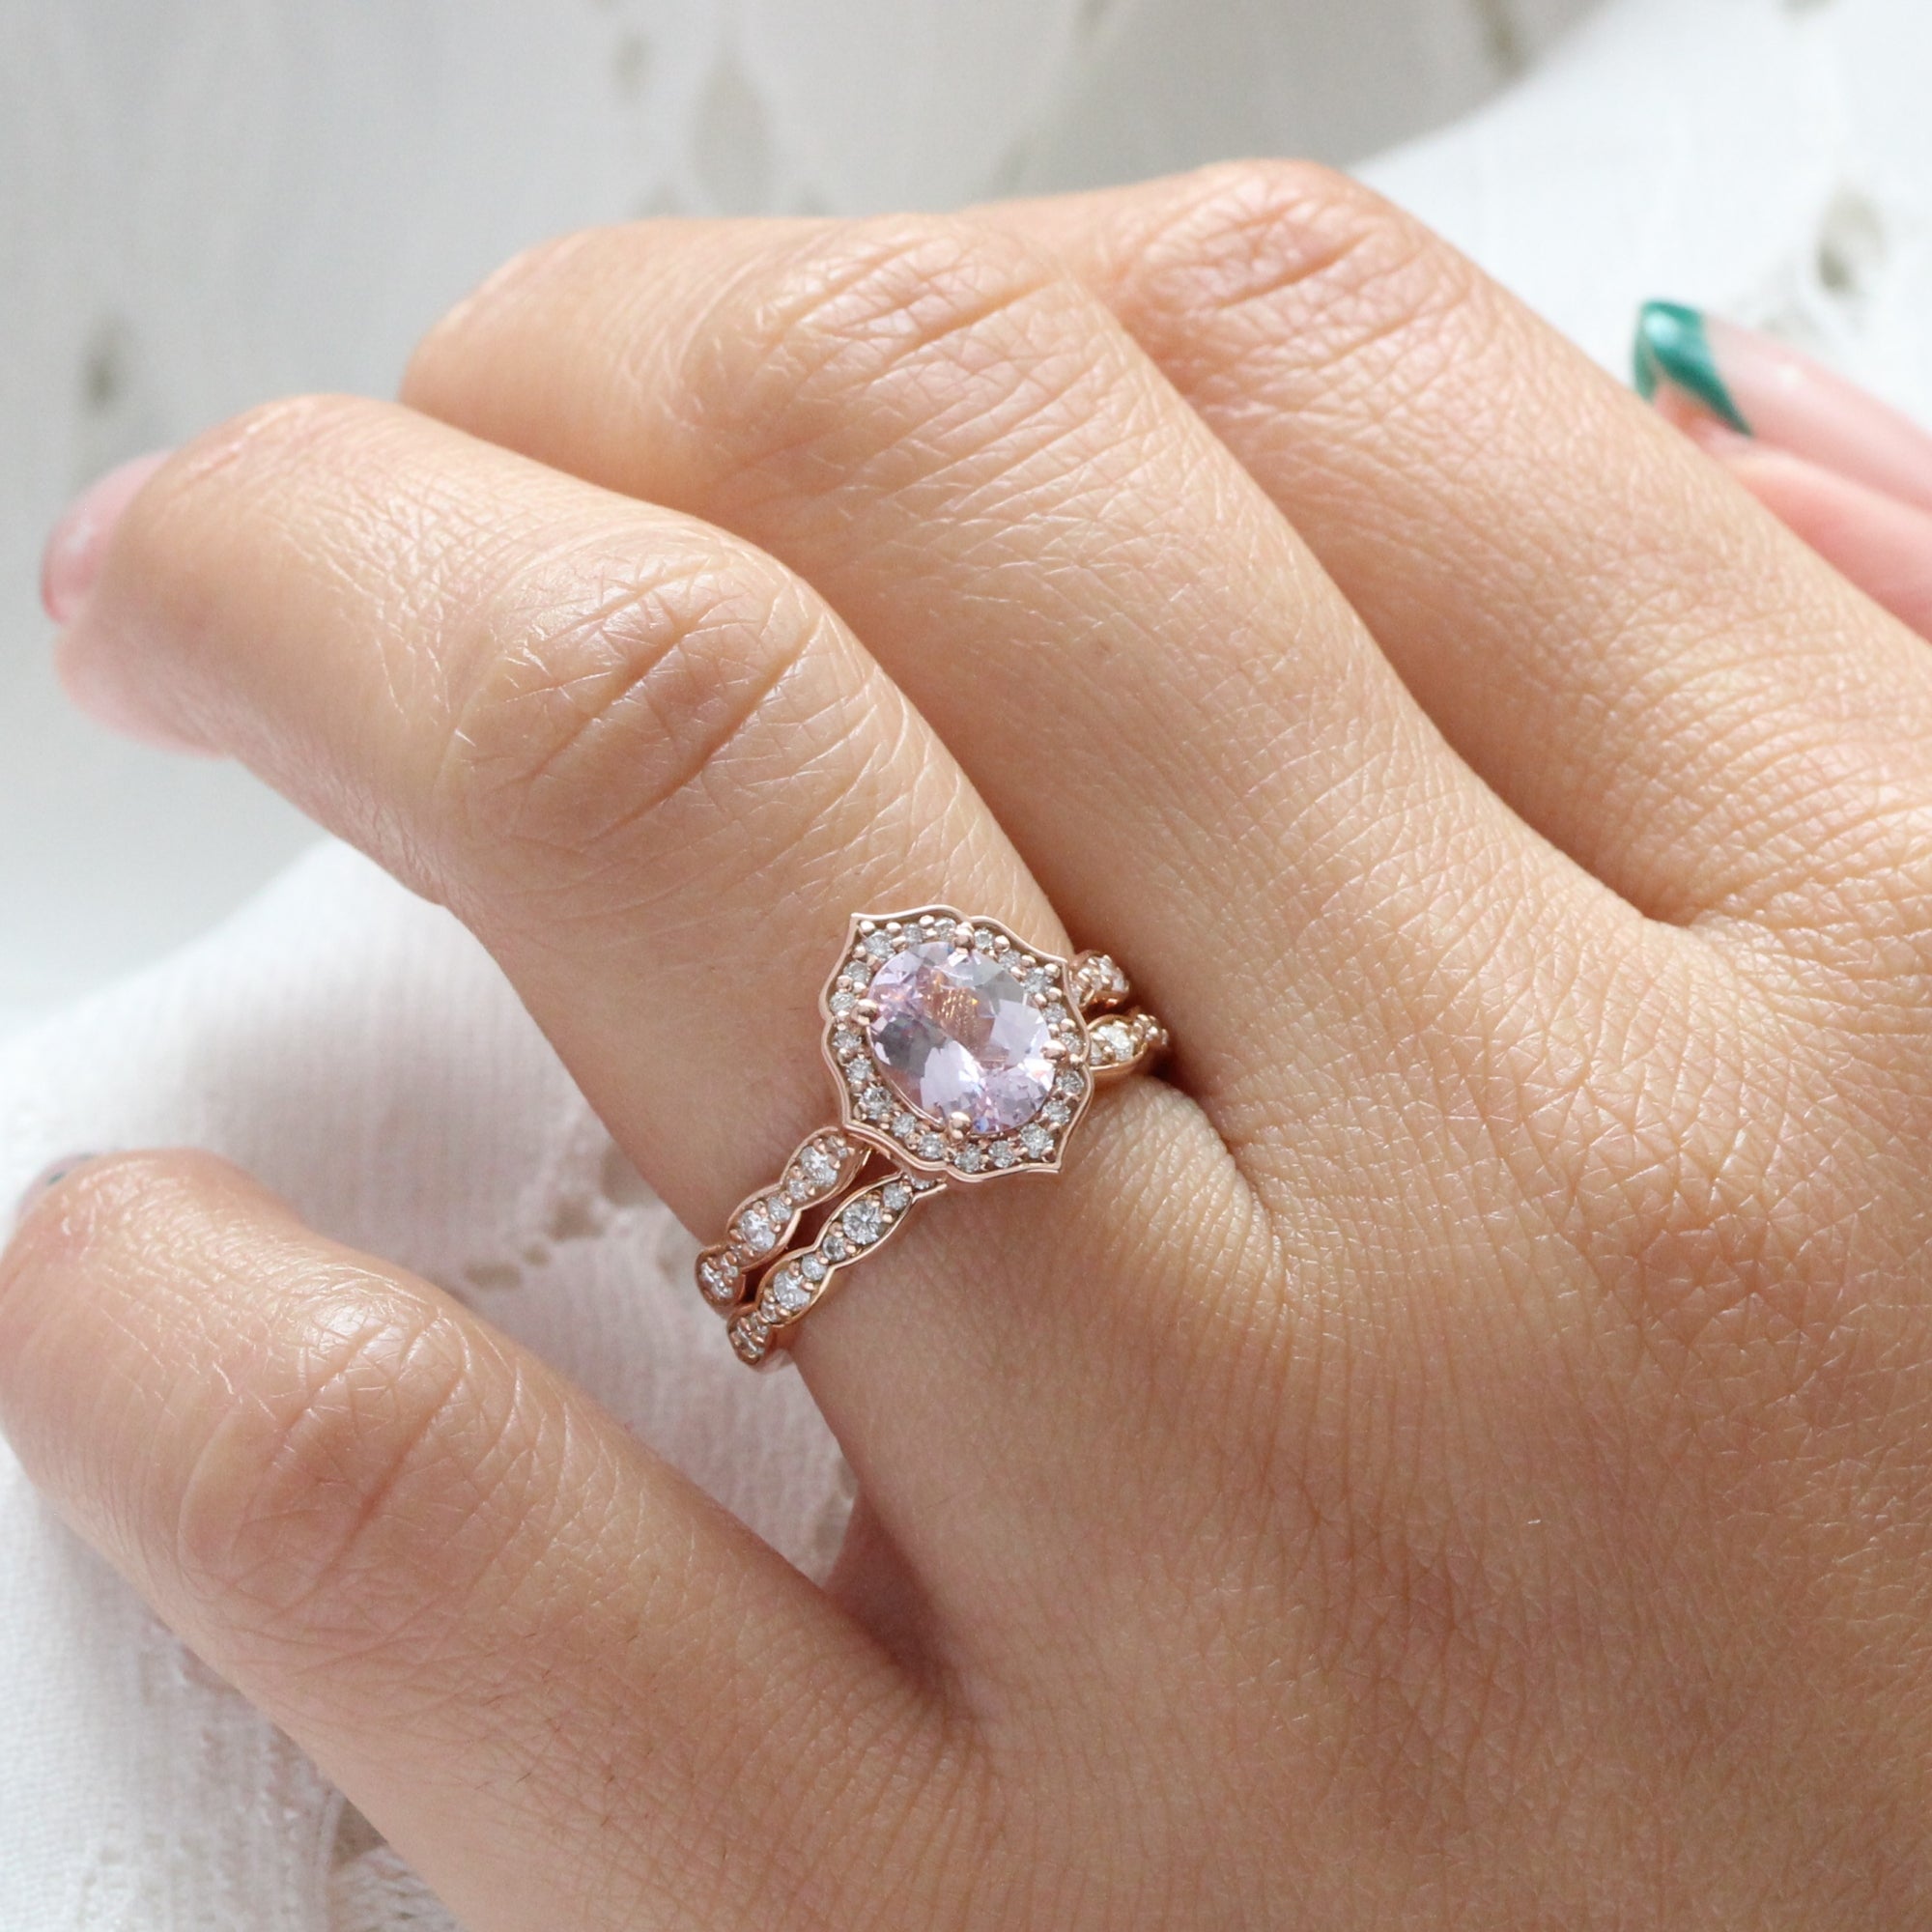 Vintage style ova lavender sapphire ring rose gold sapphire diamond ring la more design jewelry